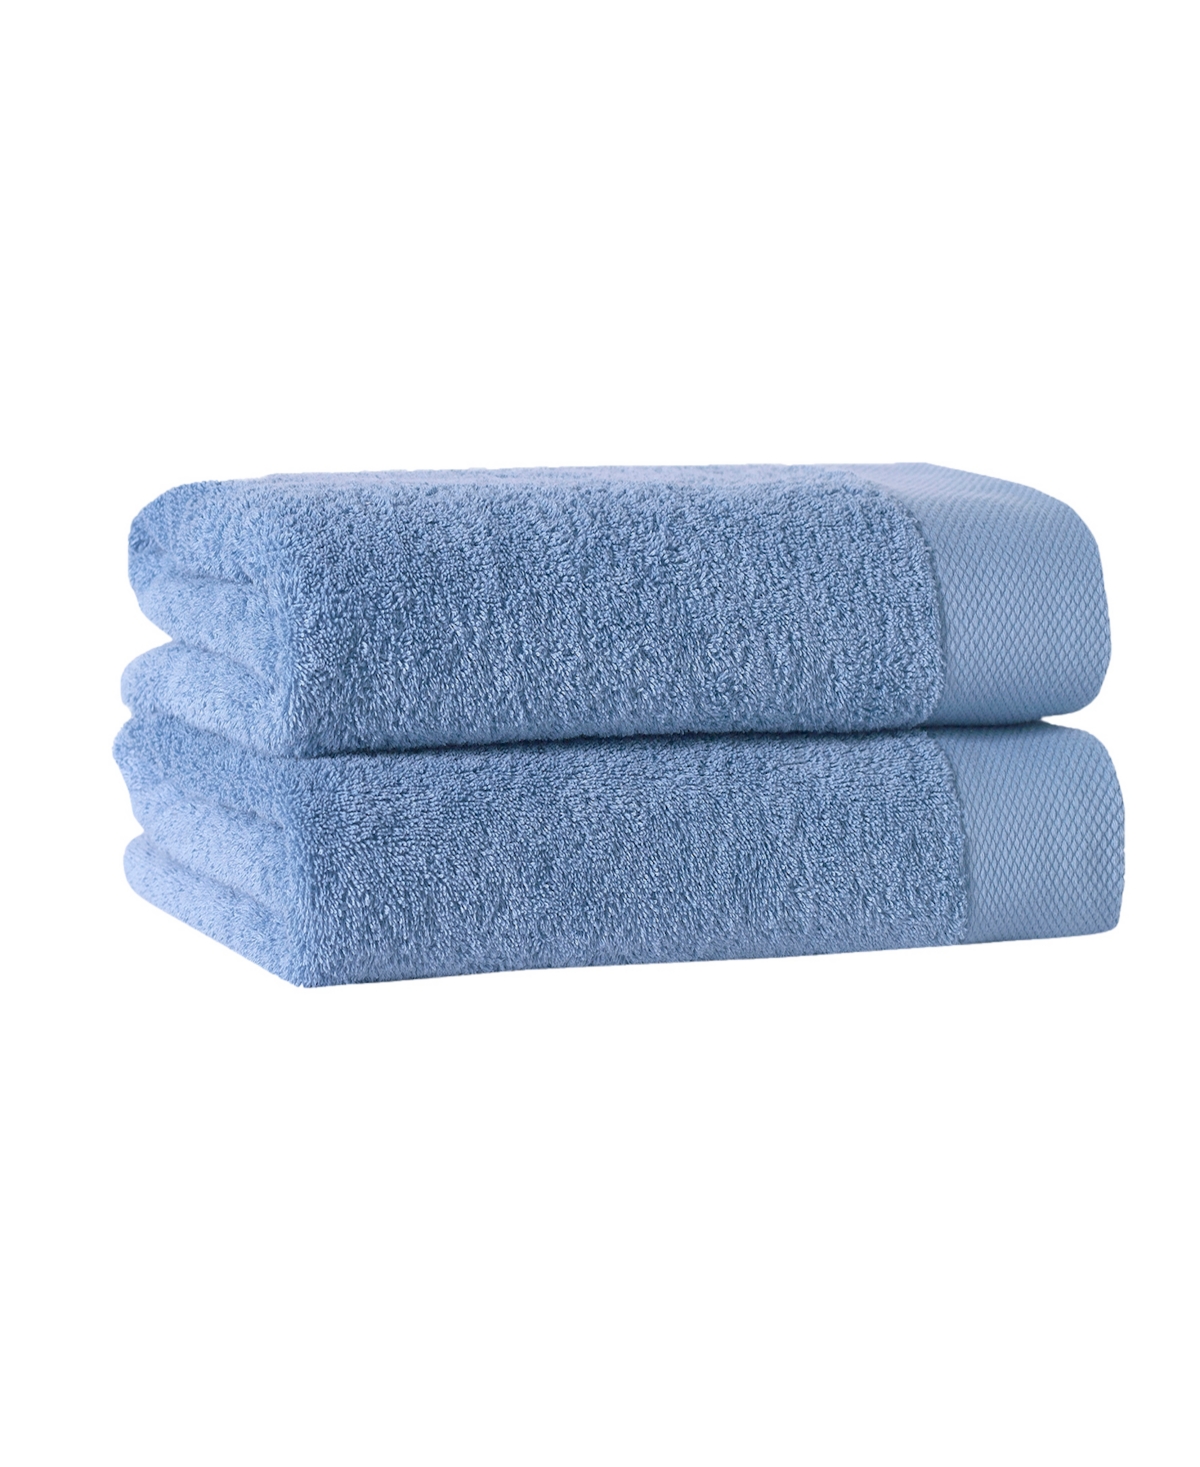 Enchante Home Signature 2-pc. Bath Sheets Turkish Cotton Towel Set In Turquoise